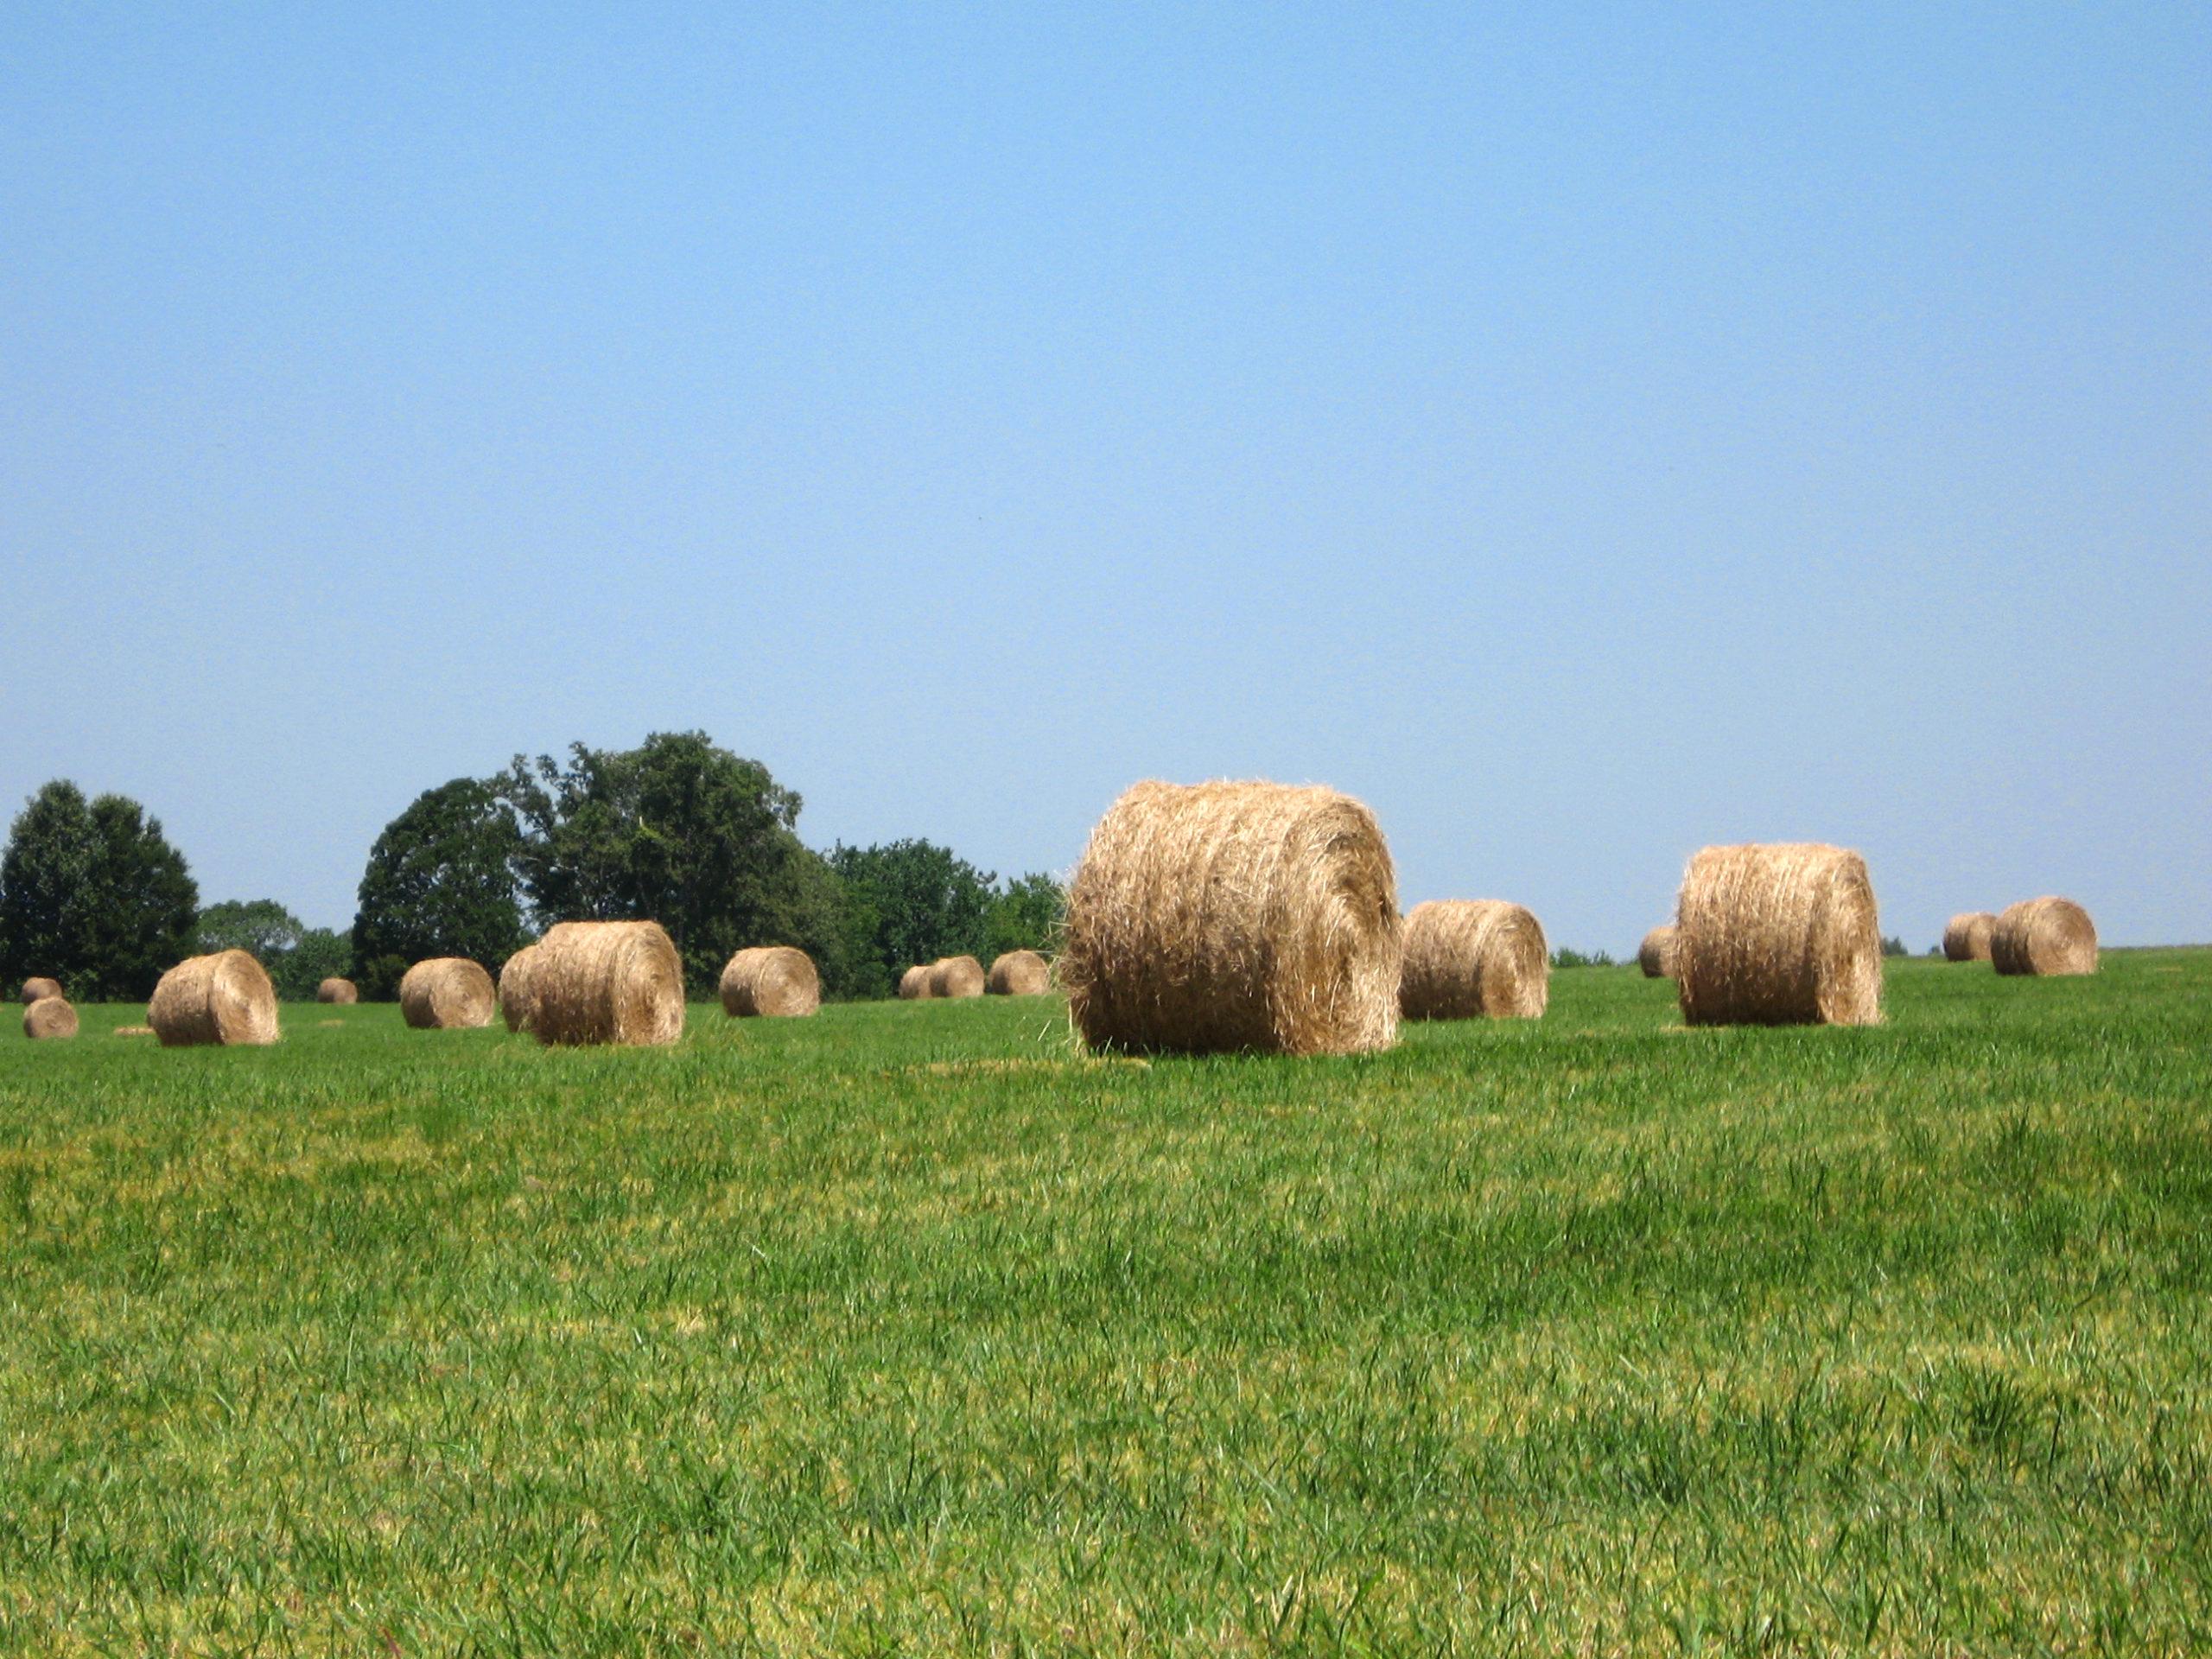 Boling Farms sells hay